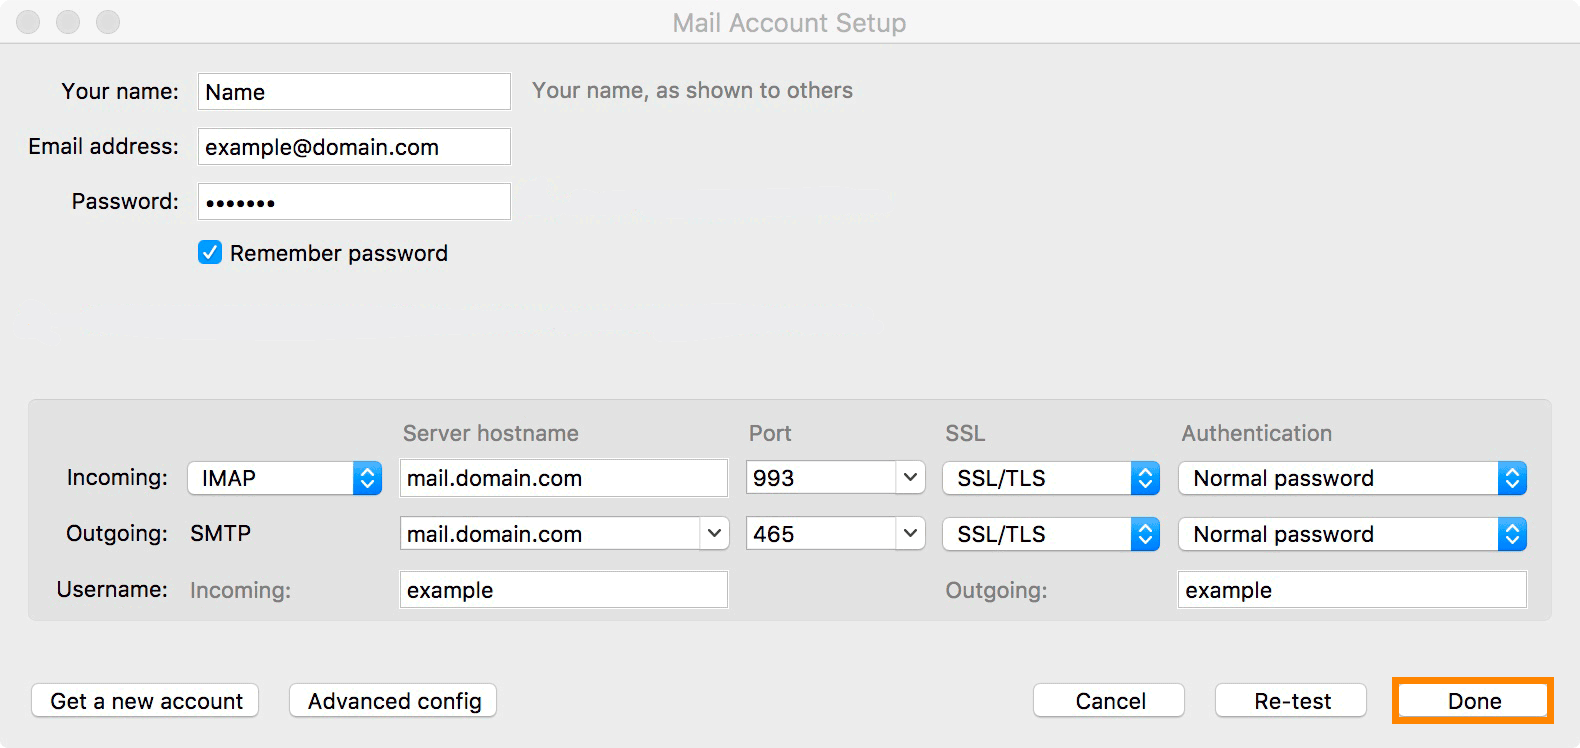 Mac : Thunderbird - Account Setup Complete